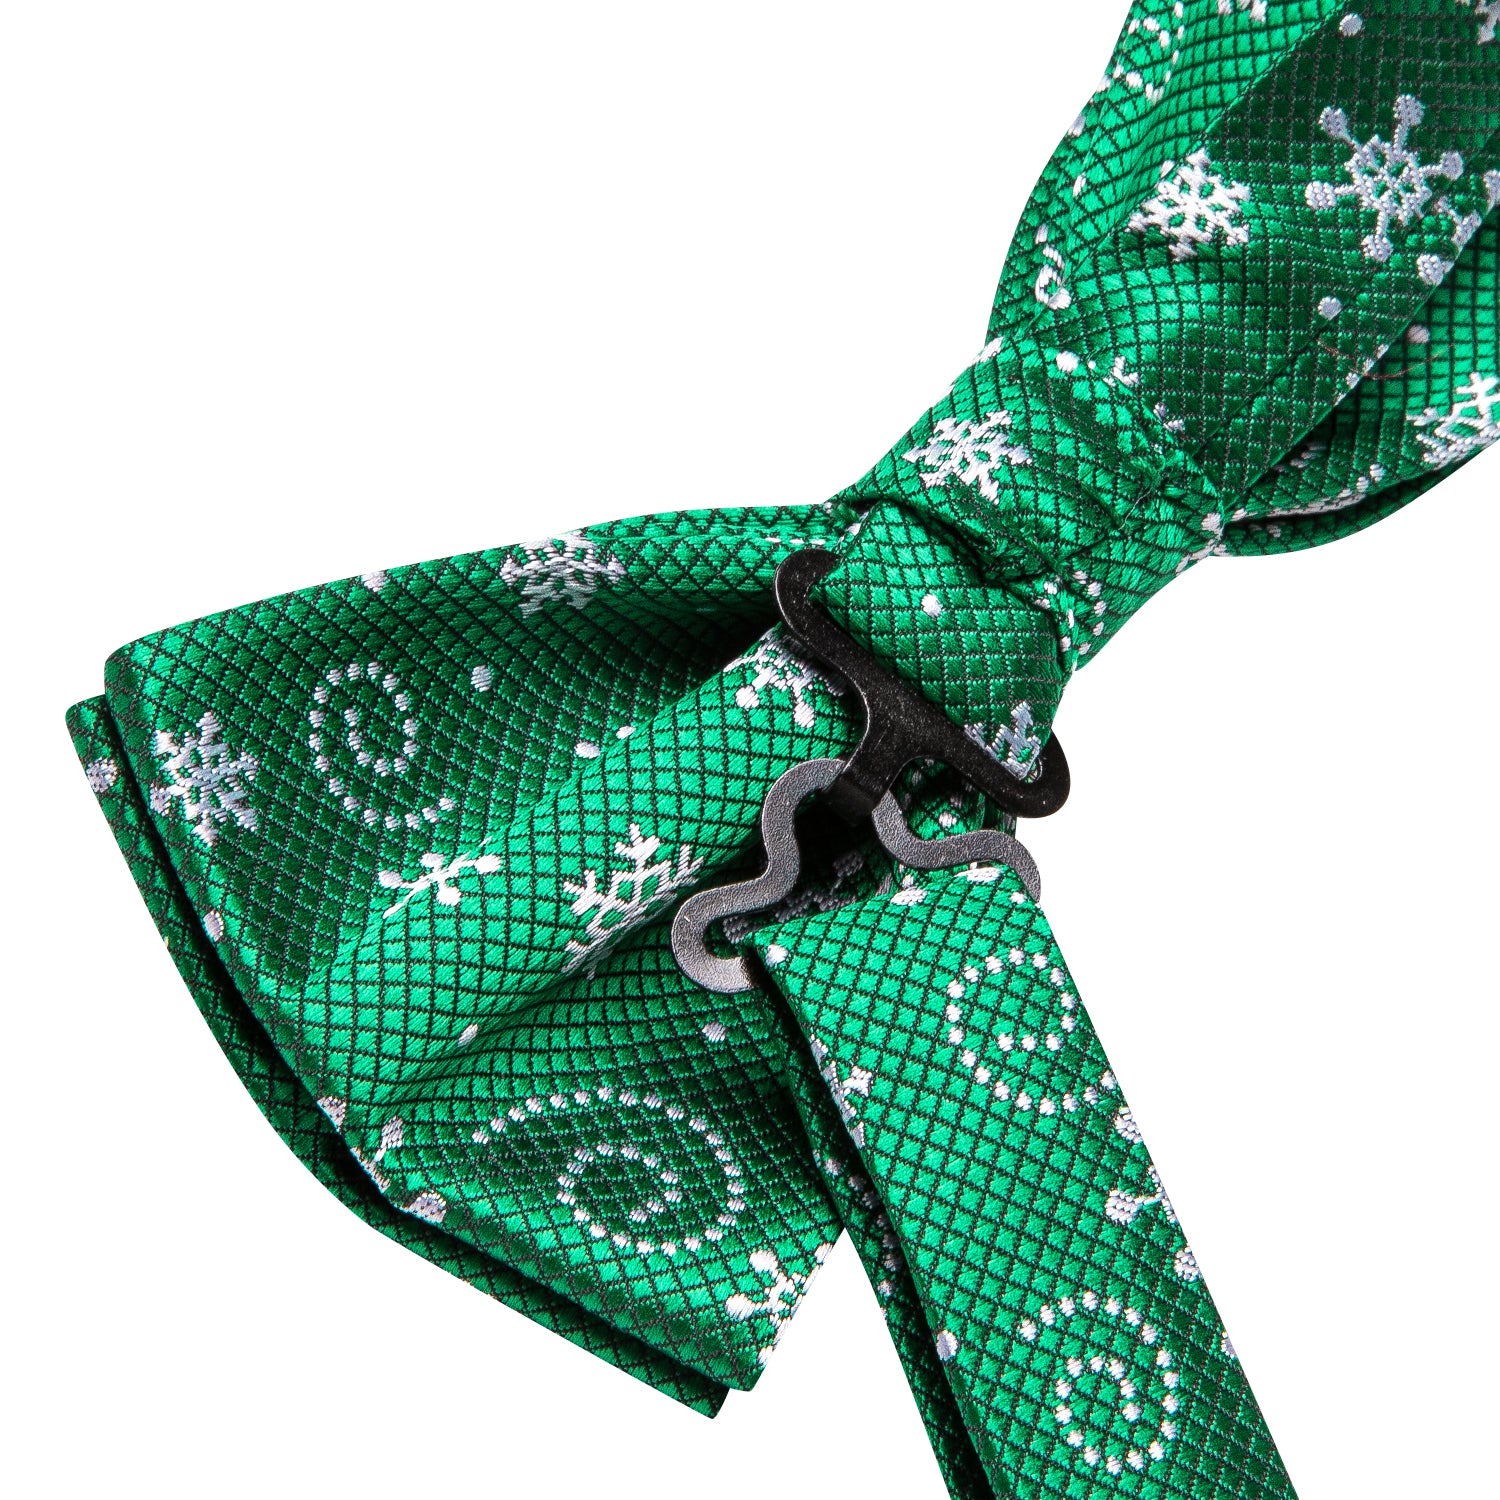 Christmas Green White Snowflake Pre-tied Bow Tie Hanky Cufflinks Set